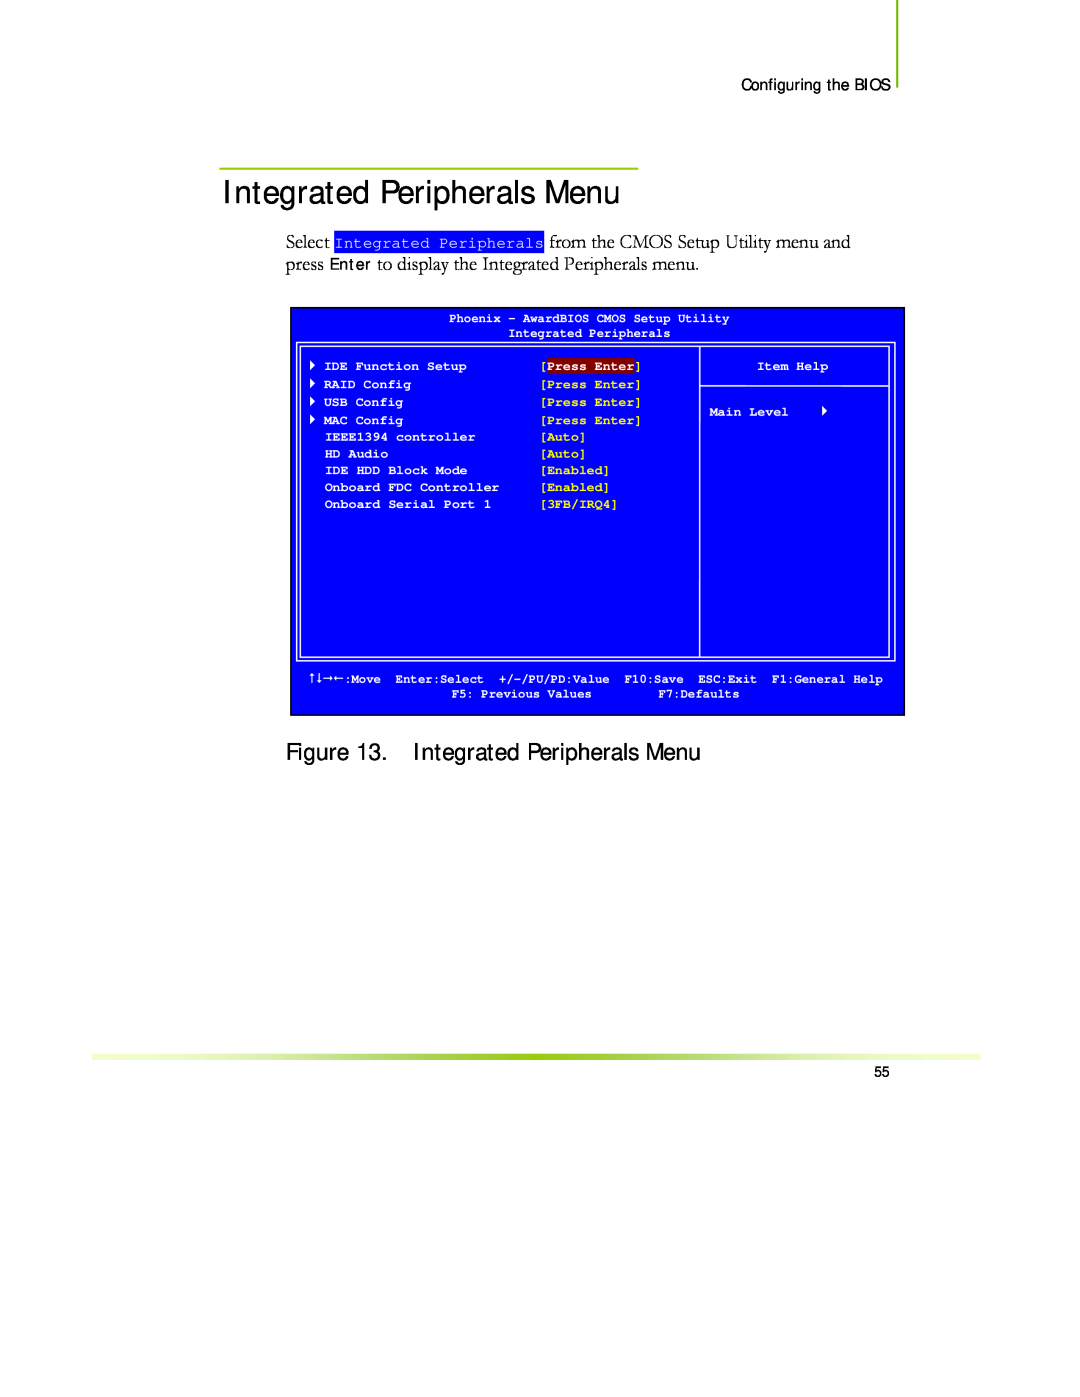 EVGA 122-CK-NF68-XX manual Integrated Peripherals Menu, Configuring the BIOS 